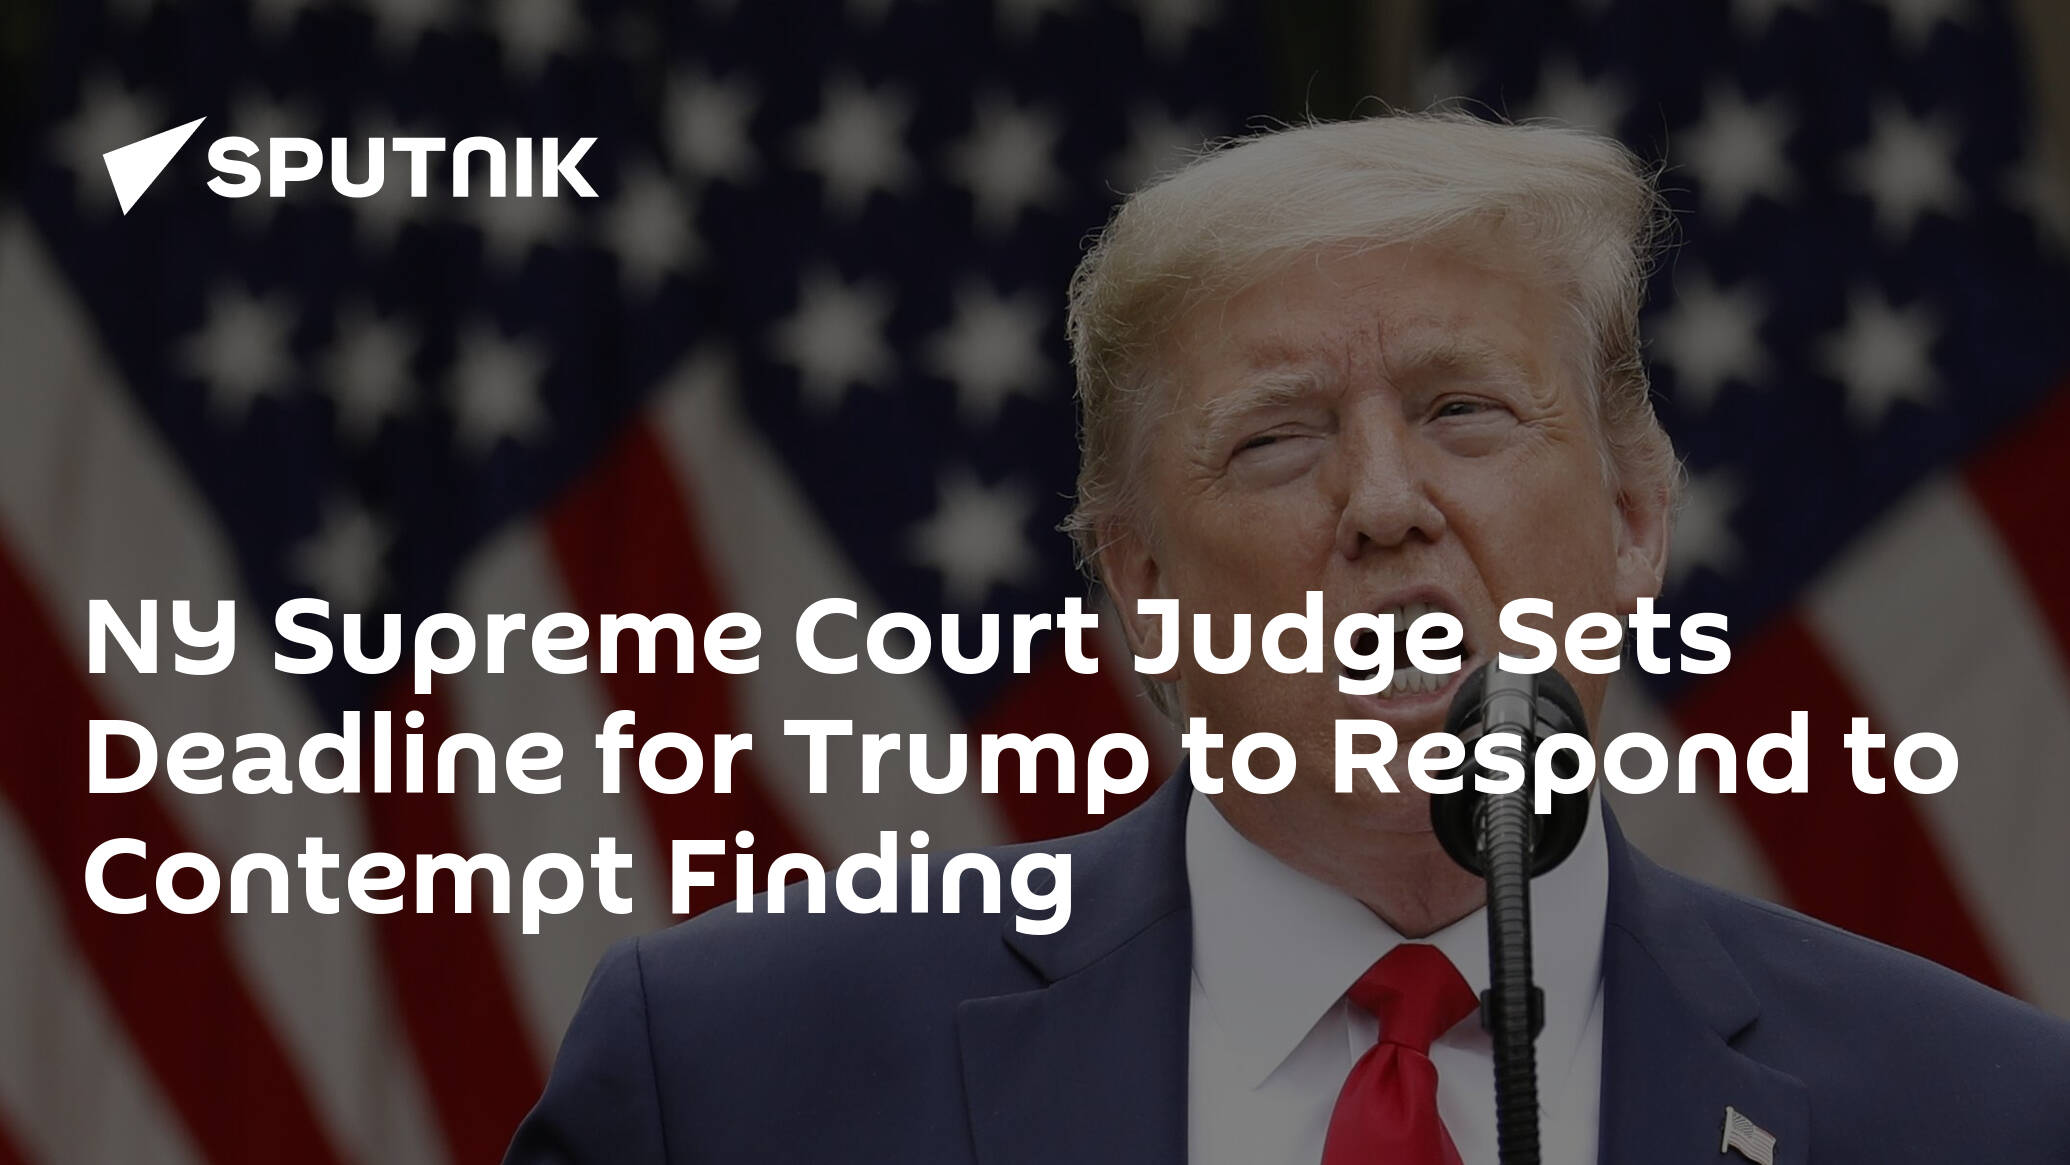 NY Supreme Court Judge Sets Deadline for Trump to Respond